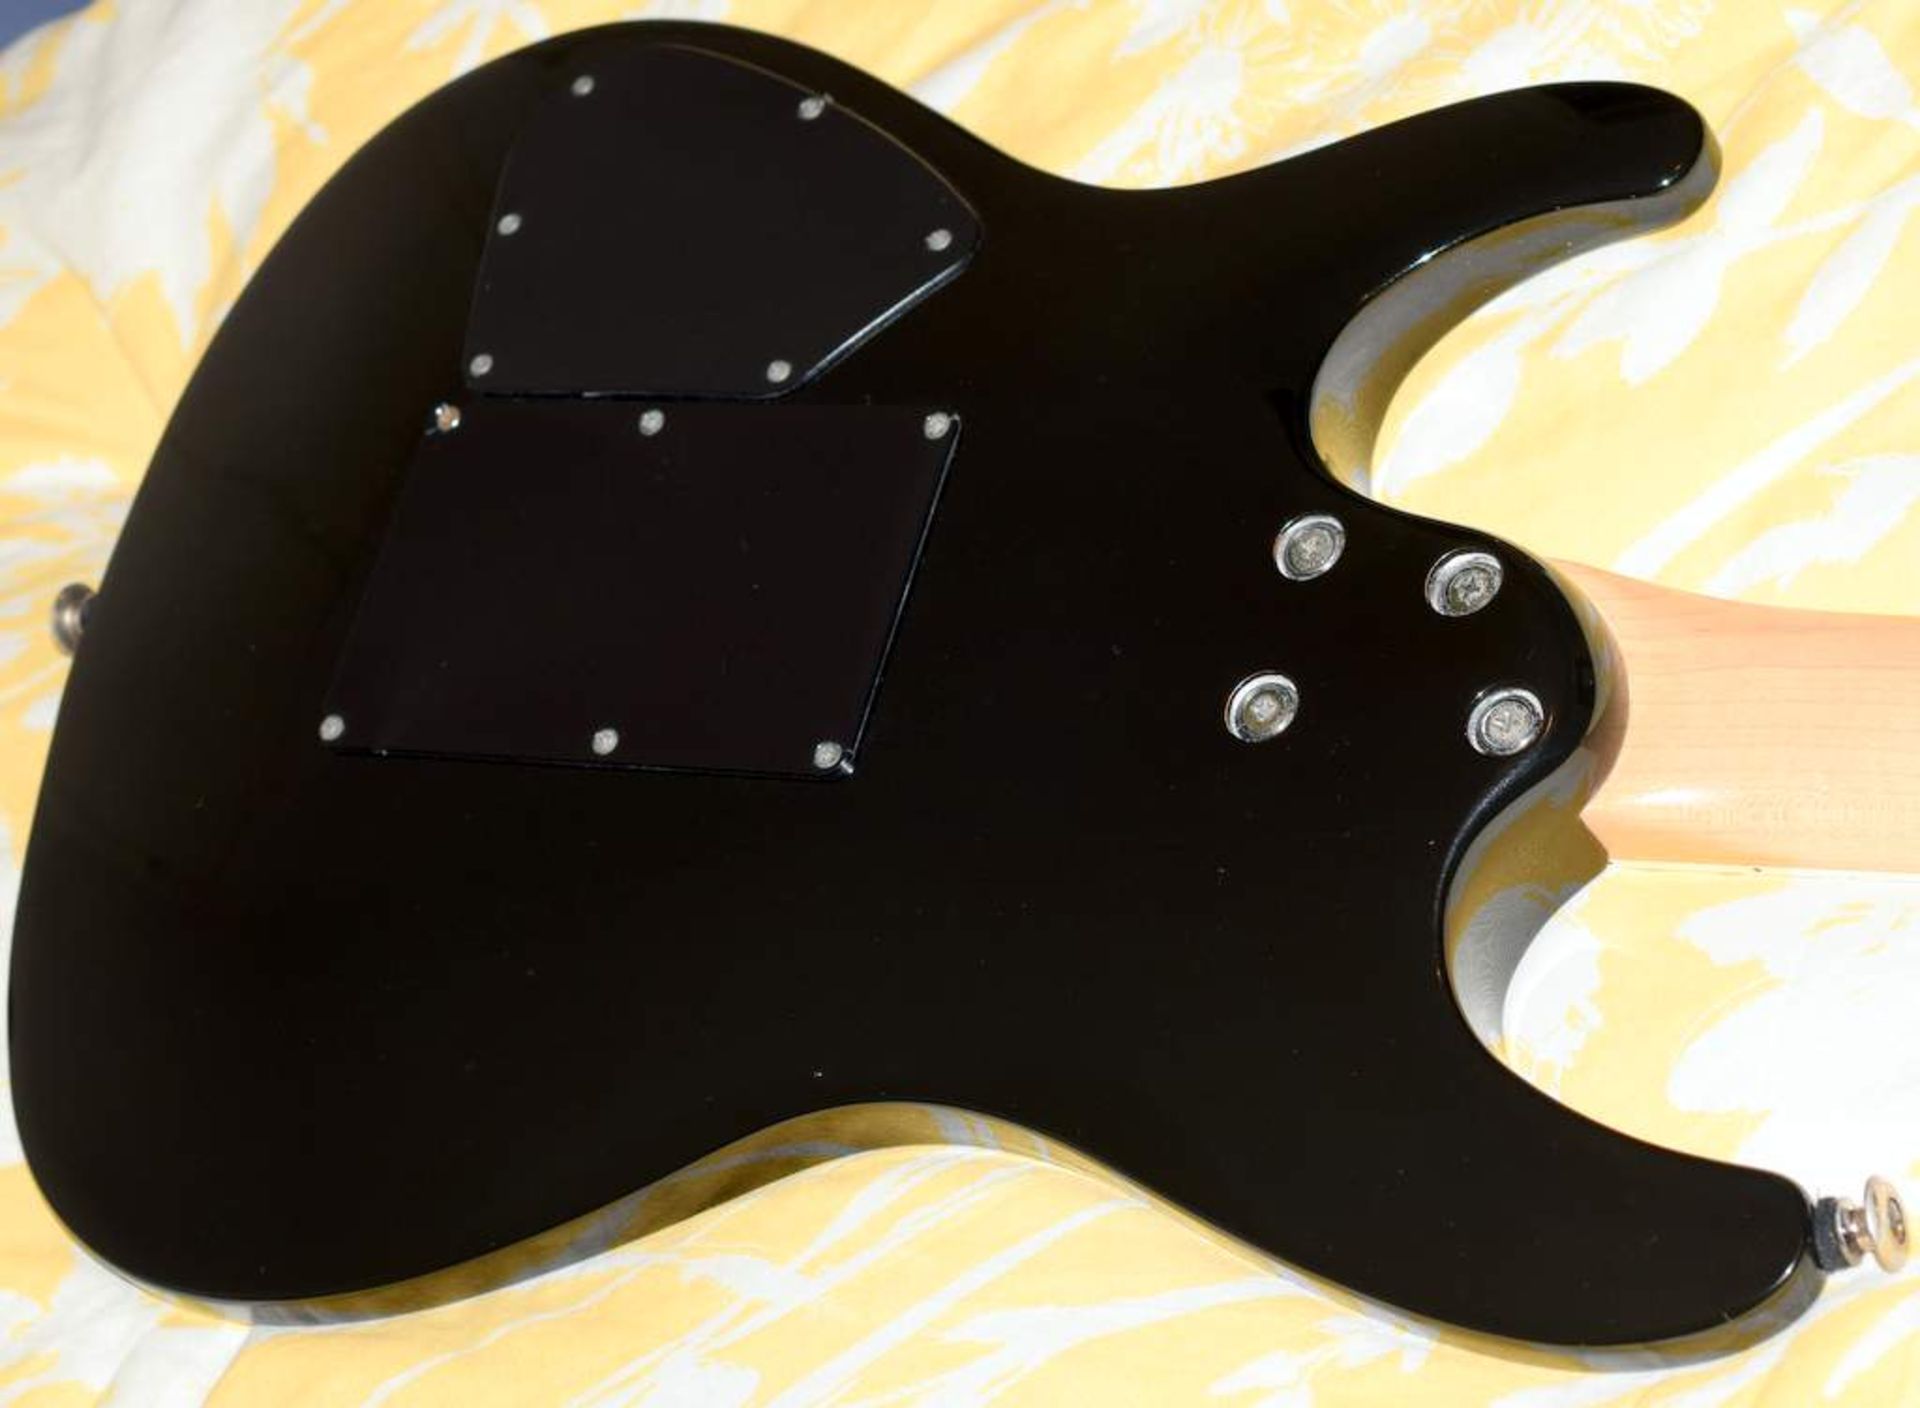 Ibanez S540 Ltd Electric Guitar In Black - Image 6 of 12